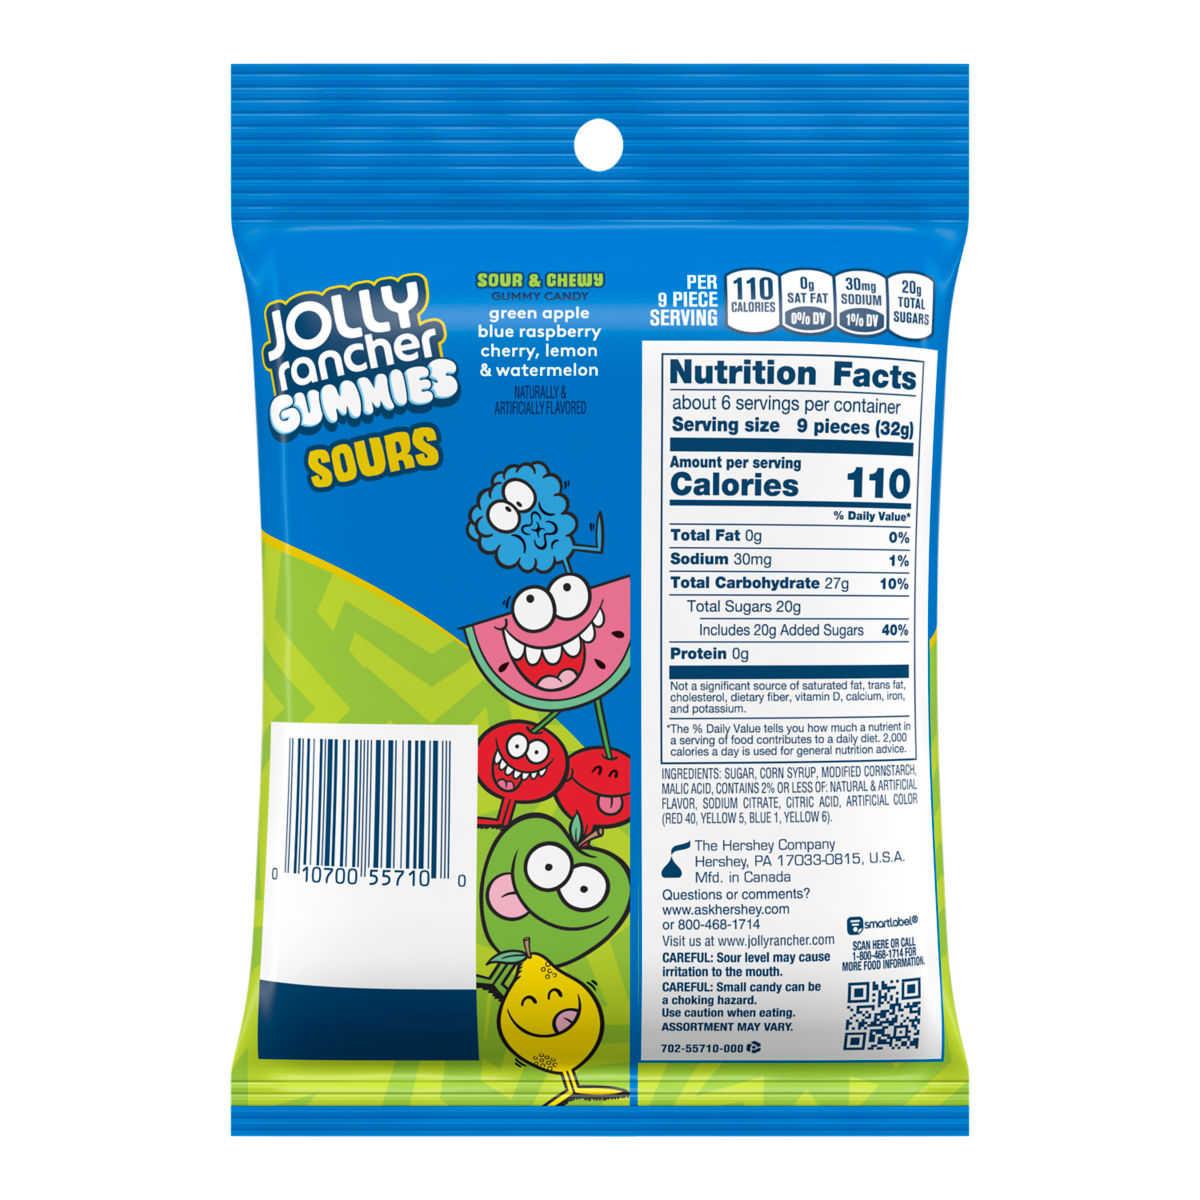 Jolly Rancher Gummies - Sours (6.5 oz)